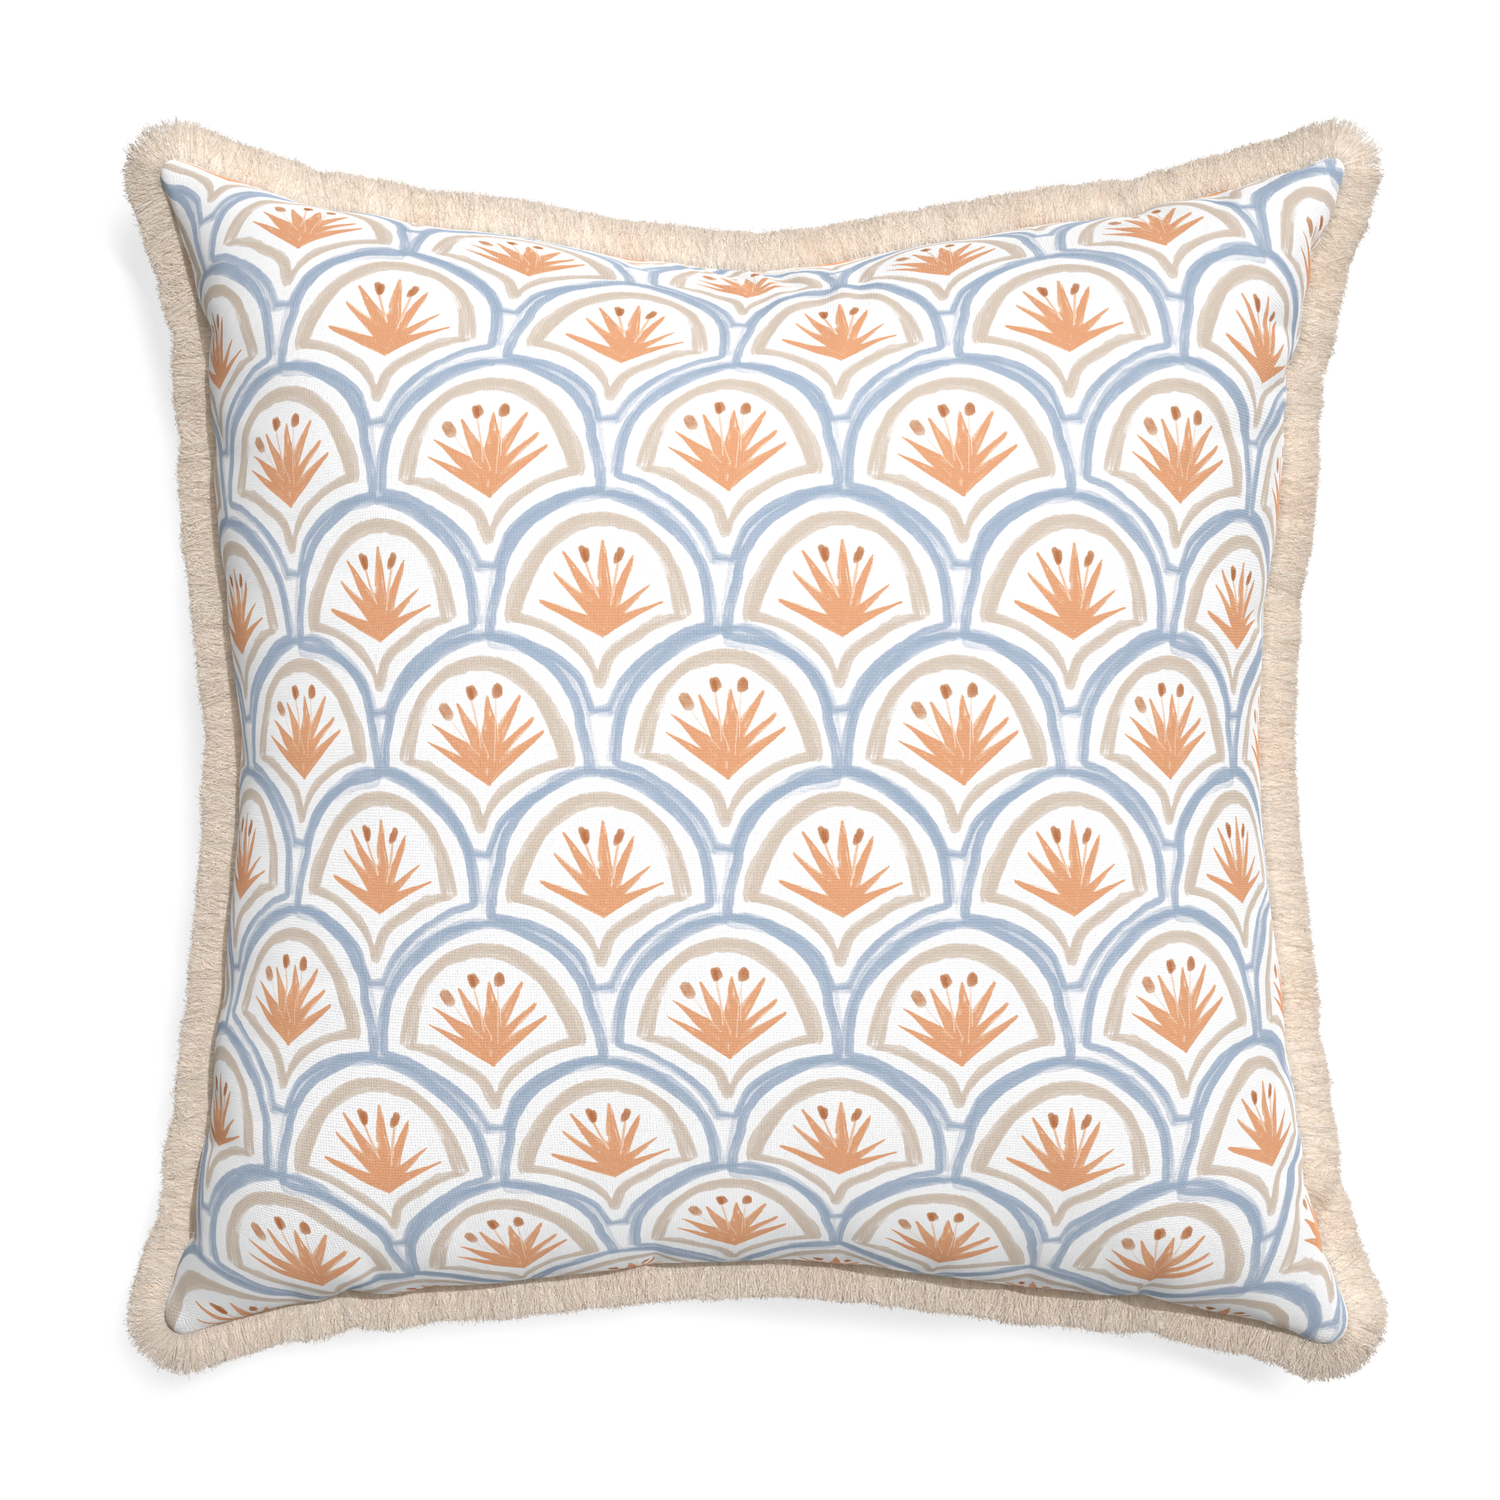 Euro-sham thatcher apricot custom pillow with cream fringe on white background